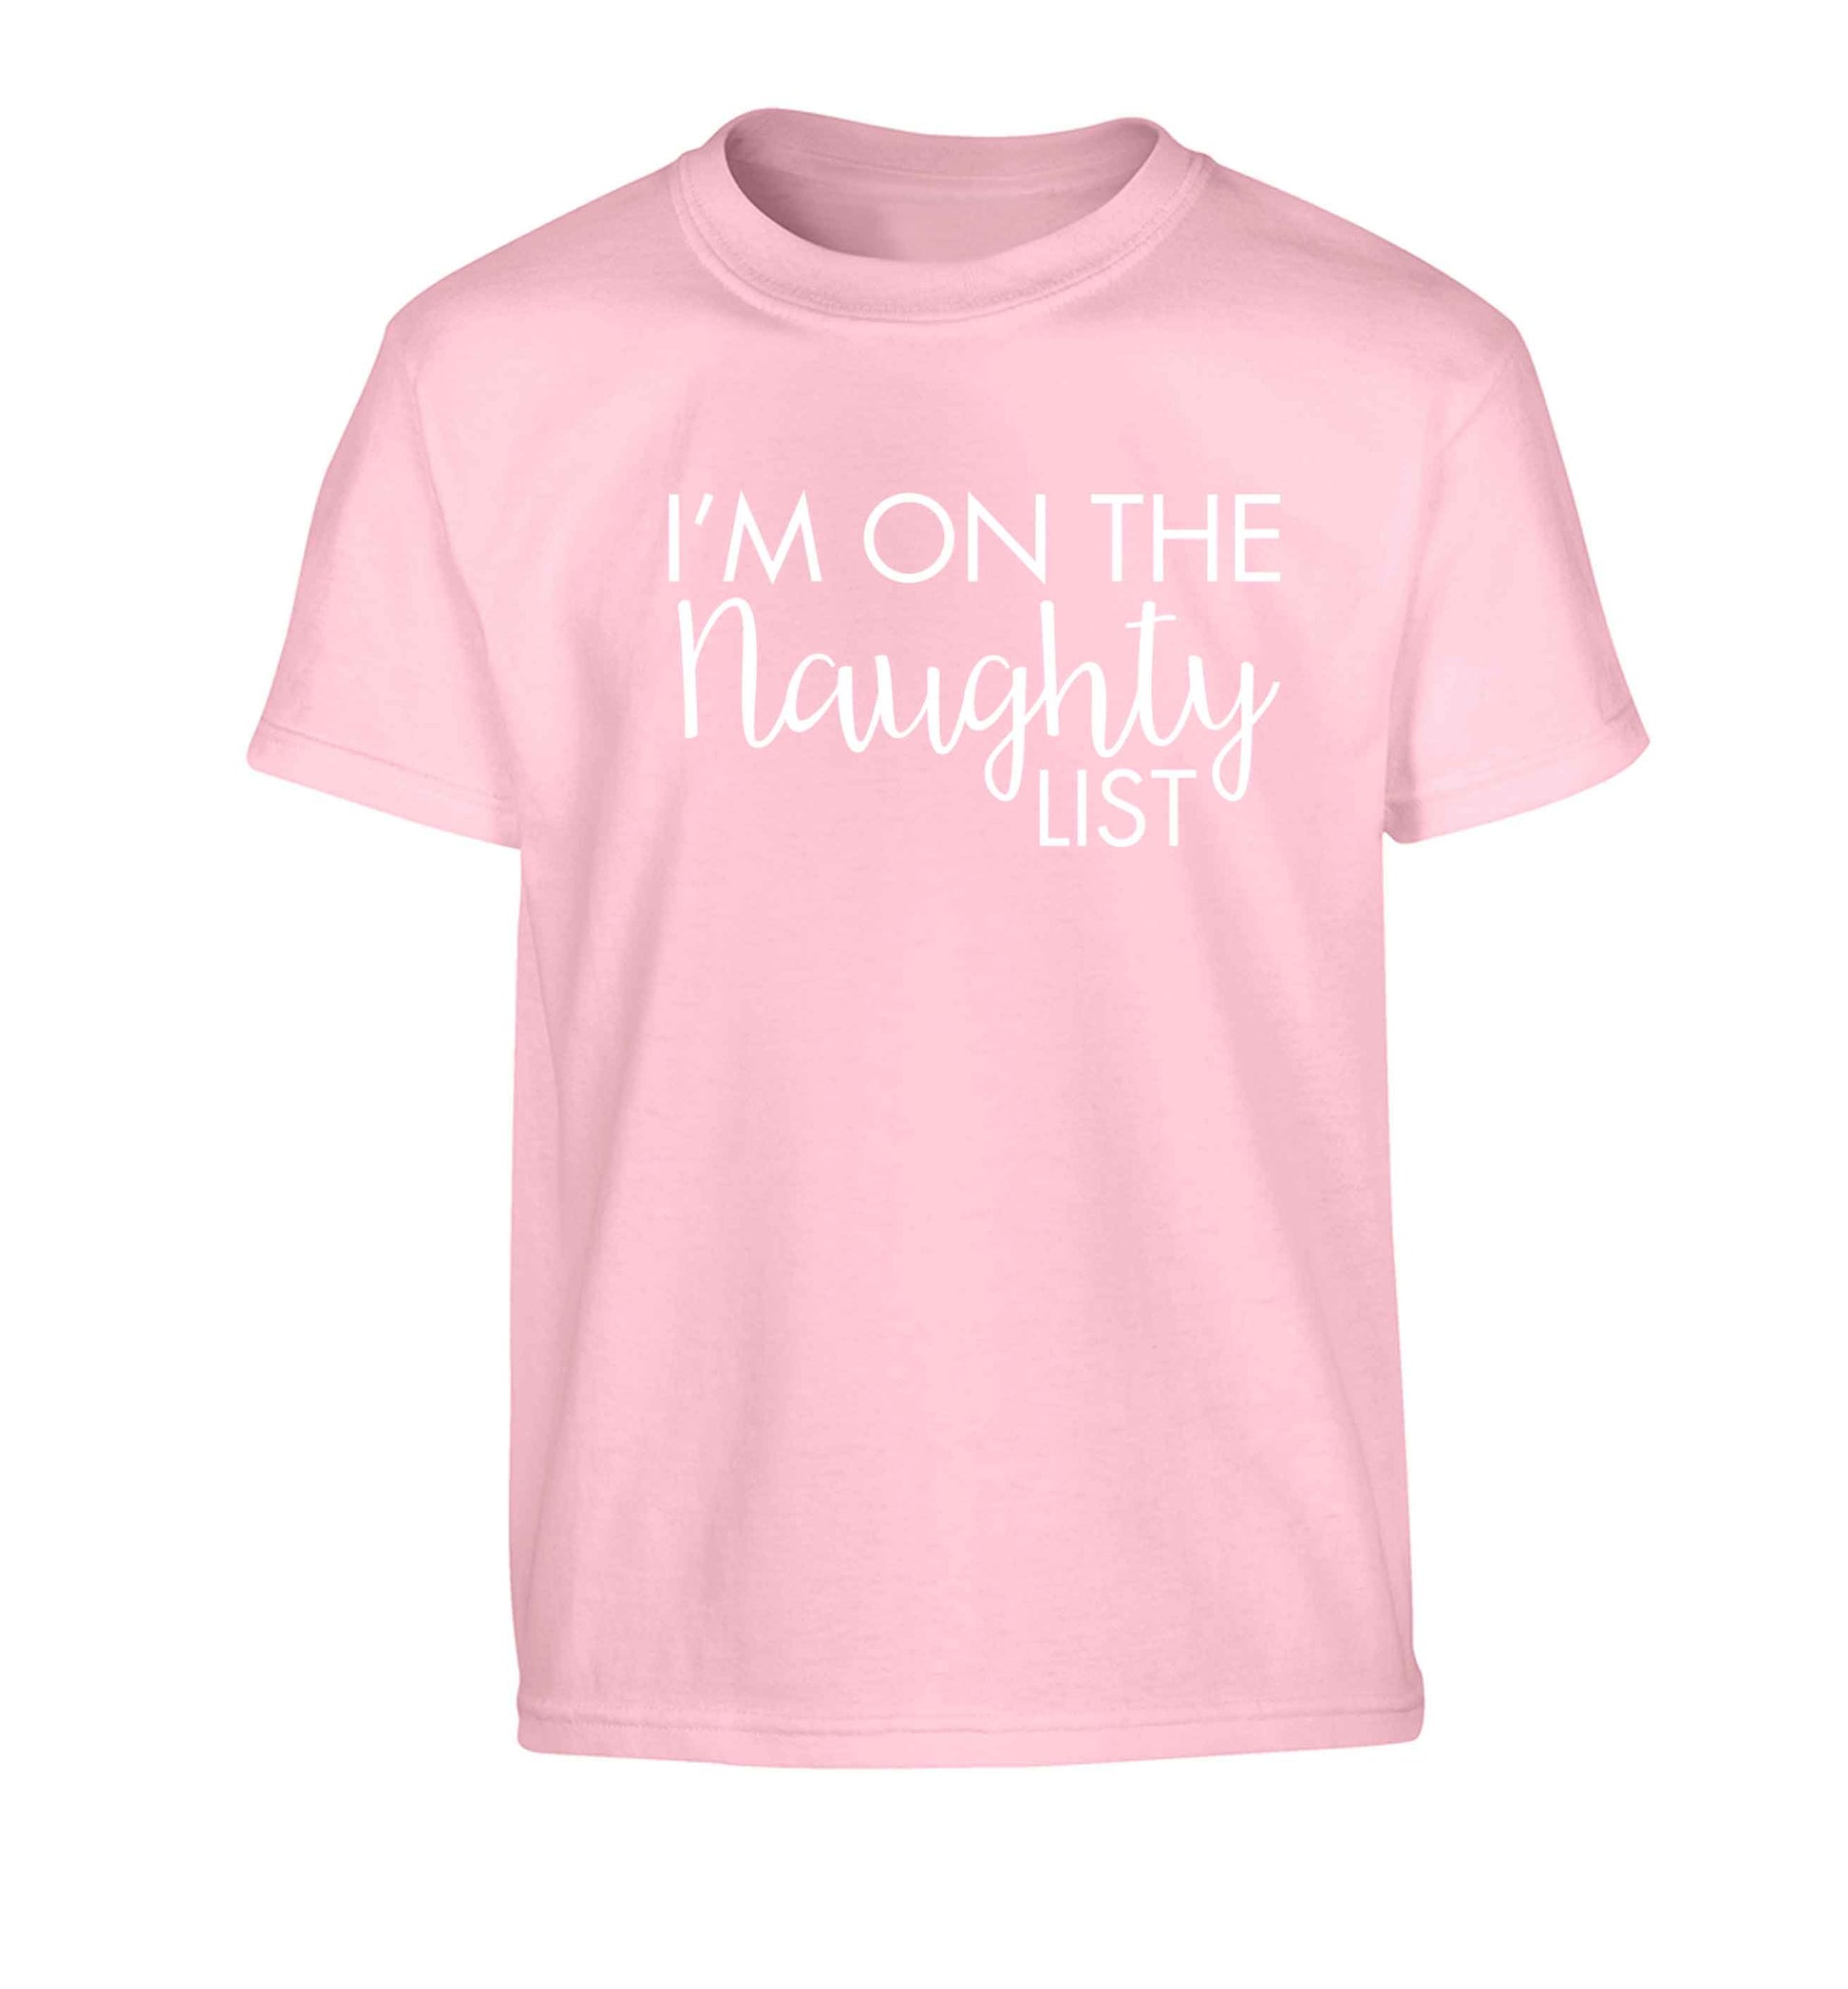 I'm on the naughty list Children's light pink Tshirt 12-13 Years